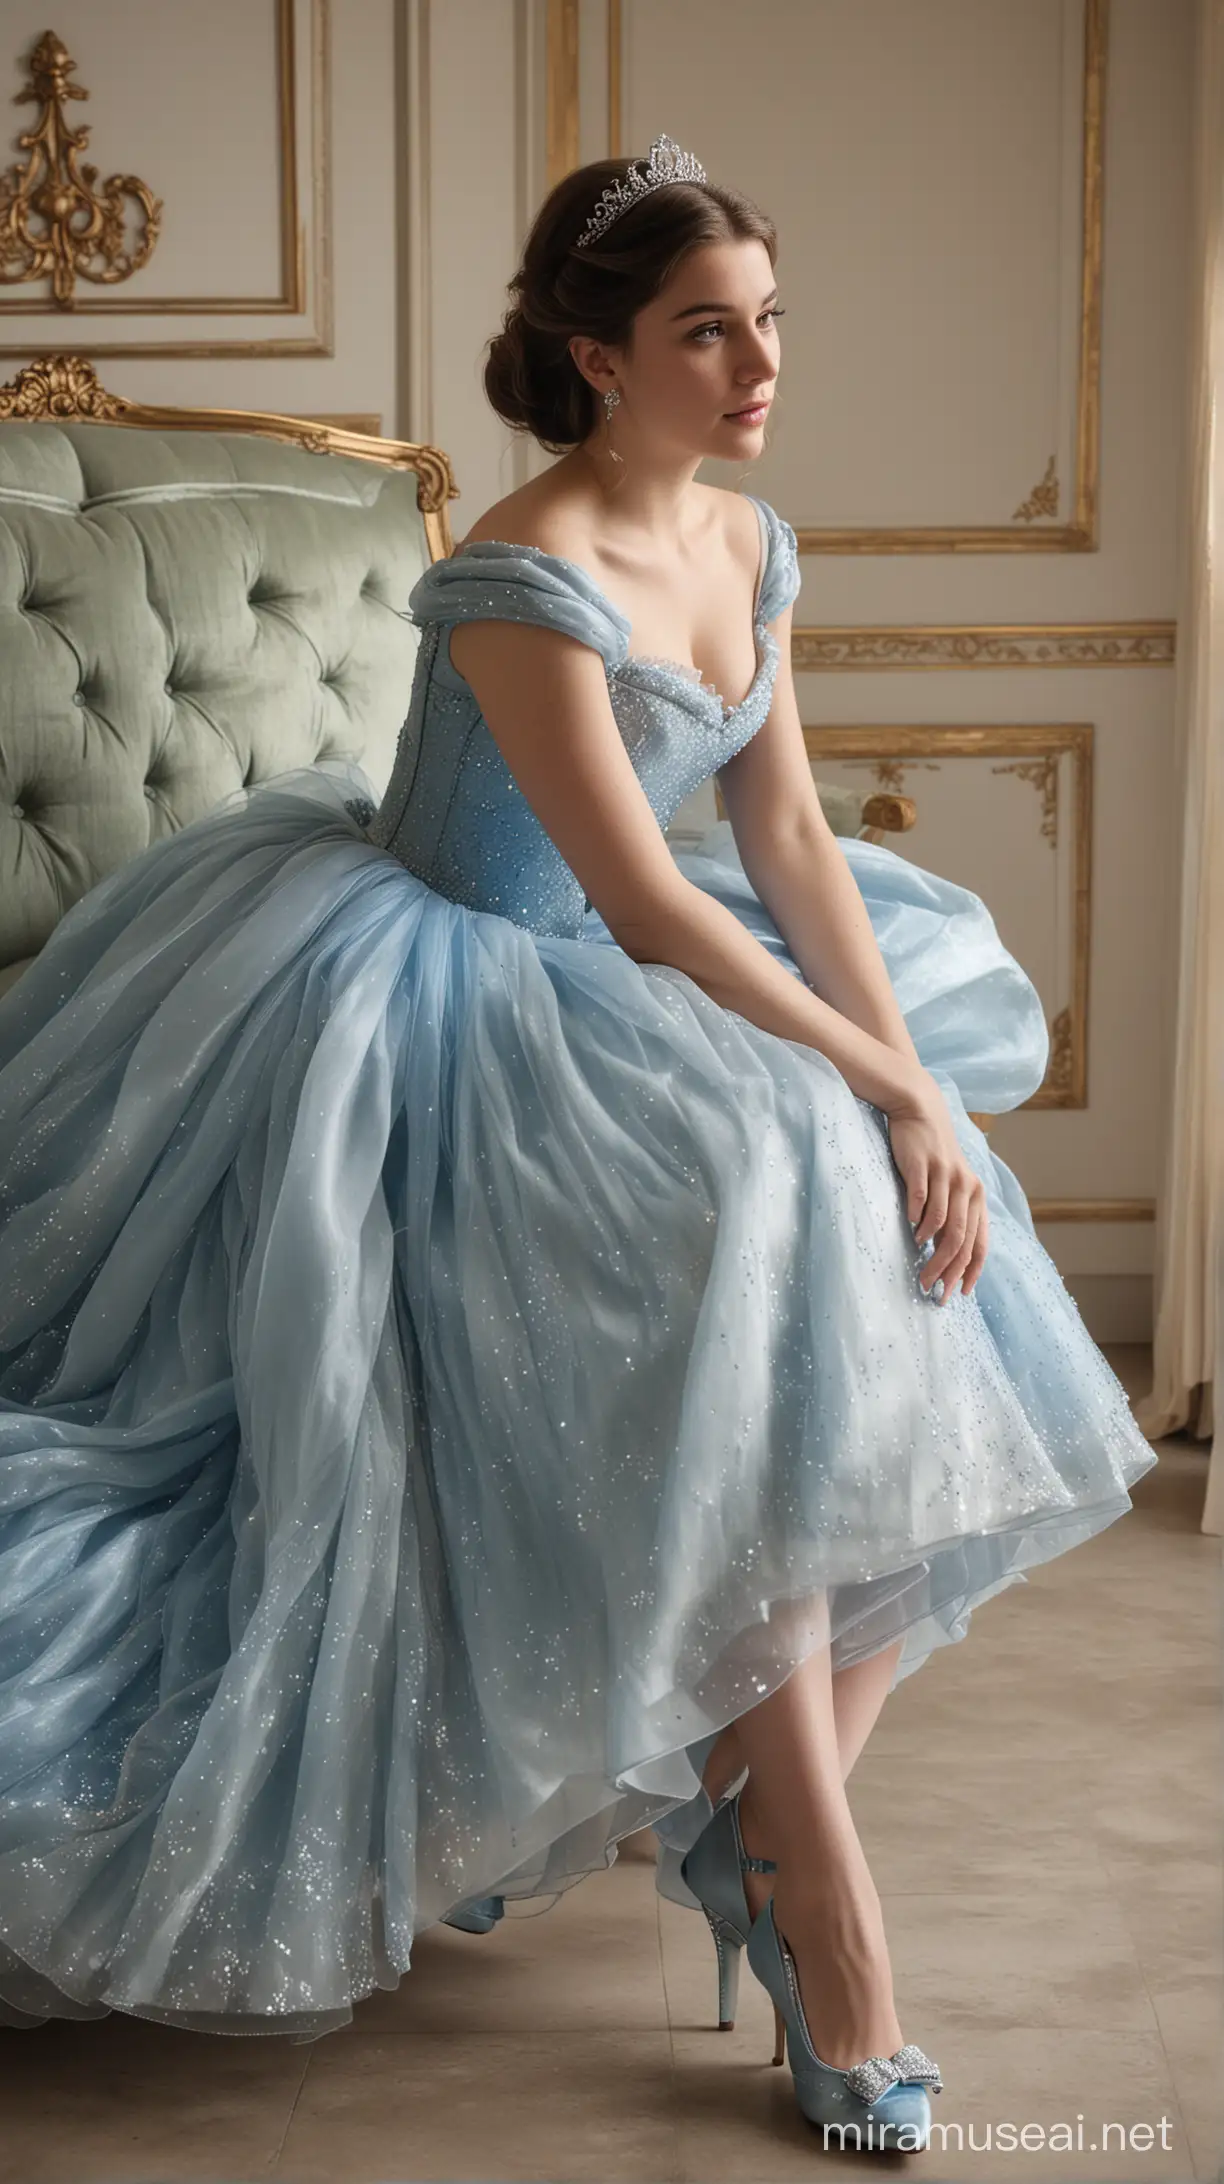 Fotografi sinematik, seorang perempuan usia 30 tahun memakai baju Cinderella dan sepatu kaca, duduk dengan elegan.